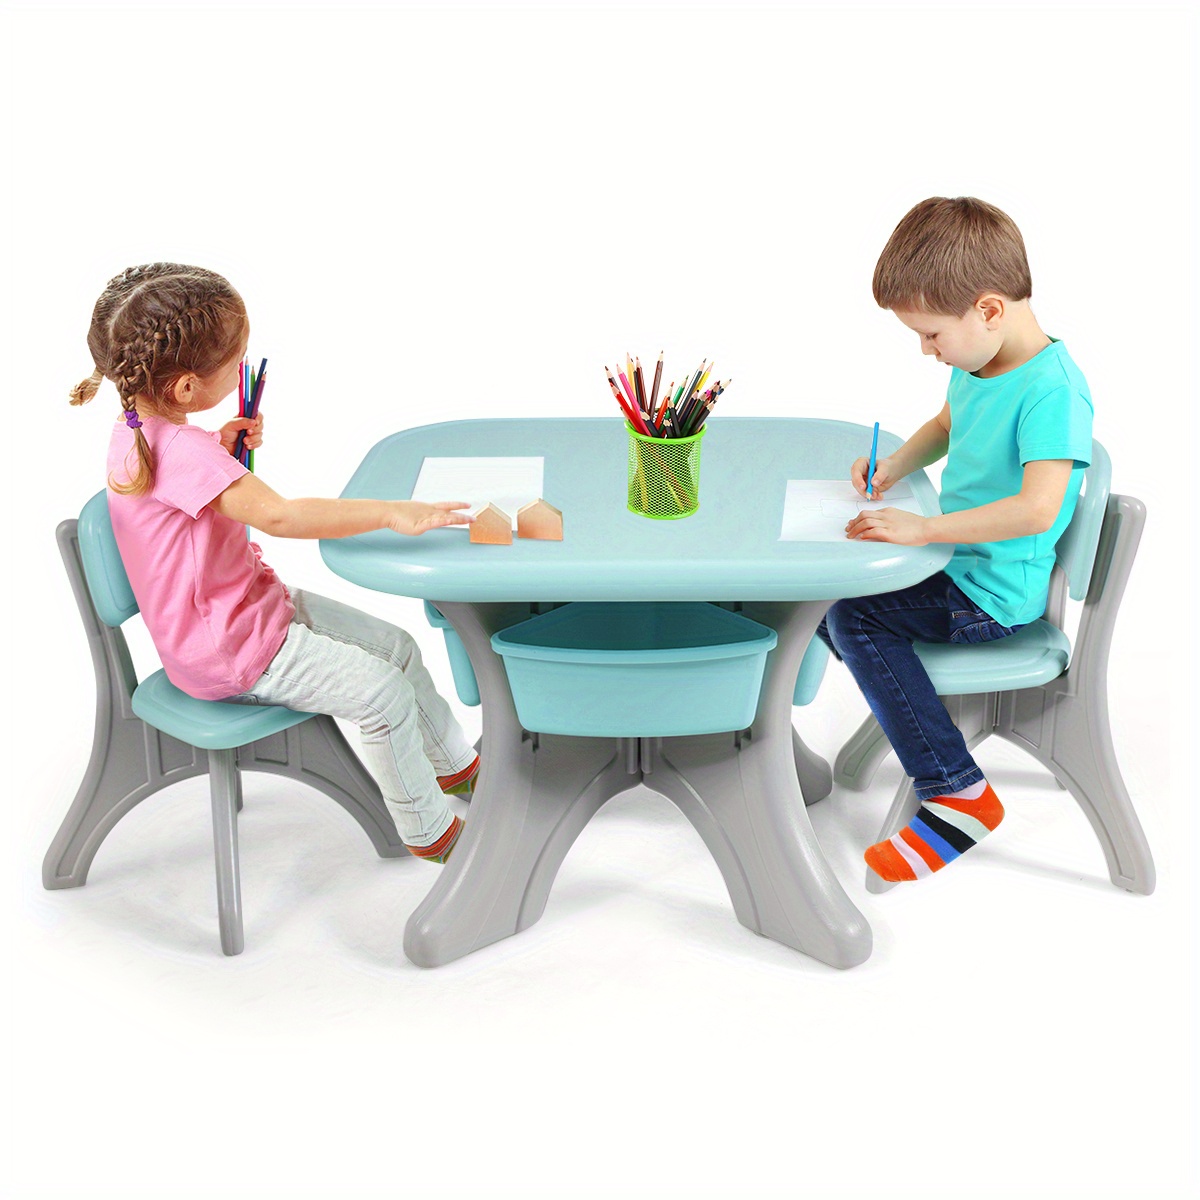 

Lifezeal Children Kids Activity Table & Chair Set Play Furniture W/ Storage Outdoor/ Indoor